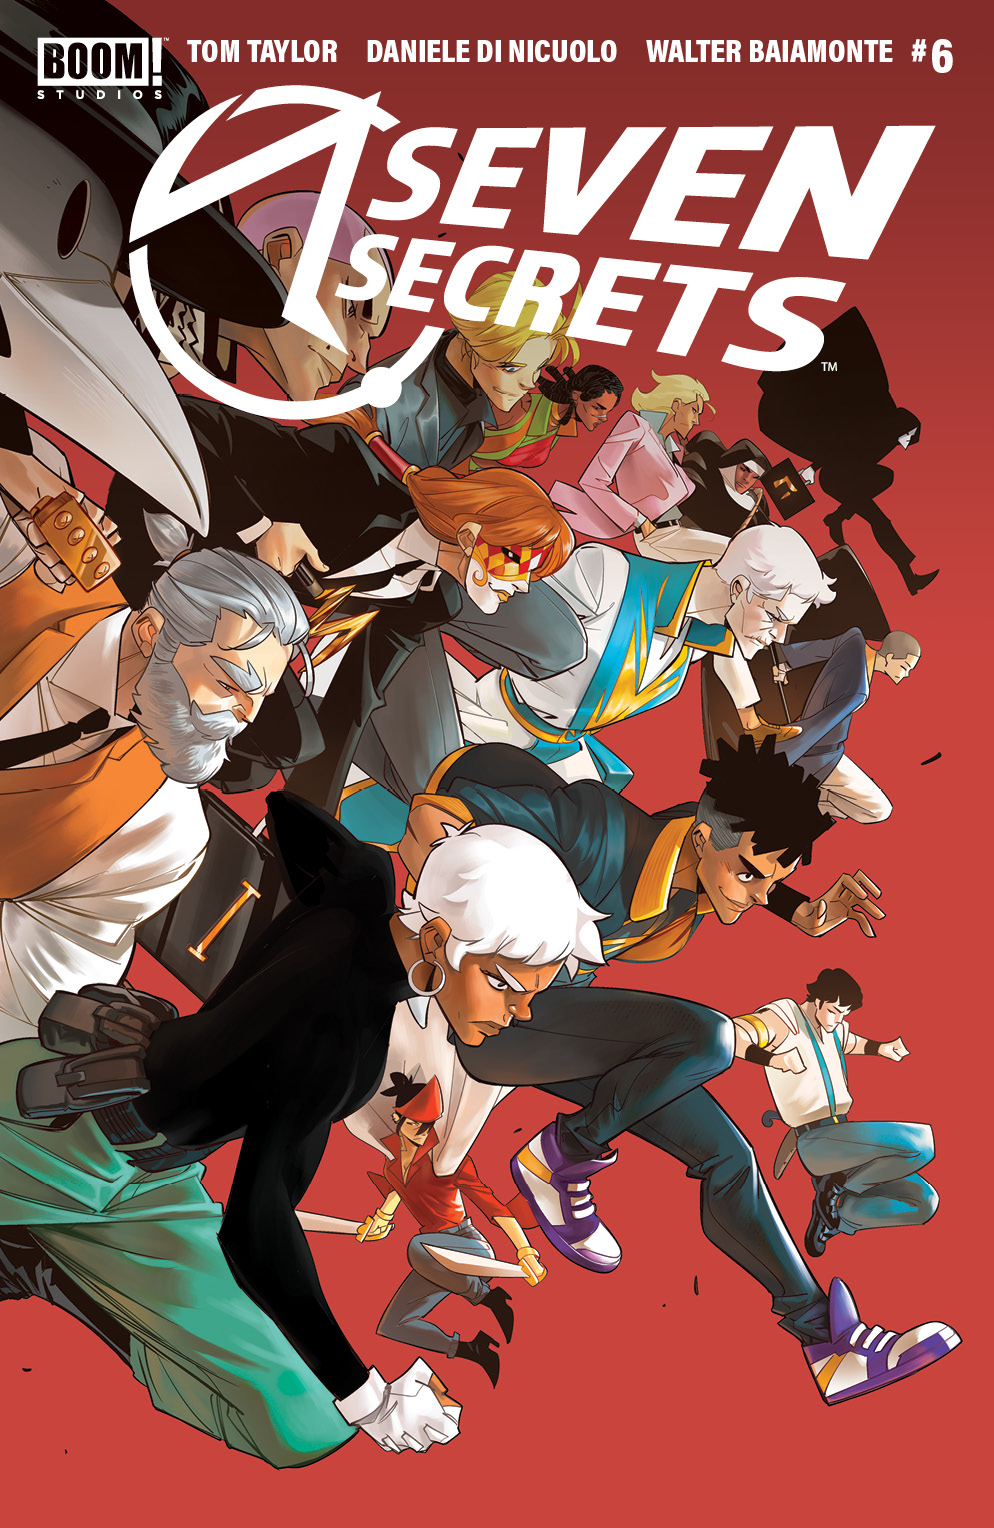 Seven Secrets #6 2nd Printing